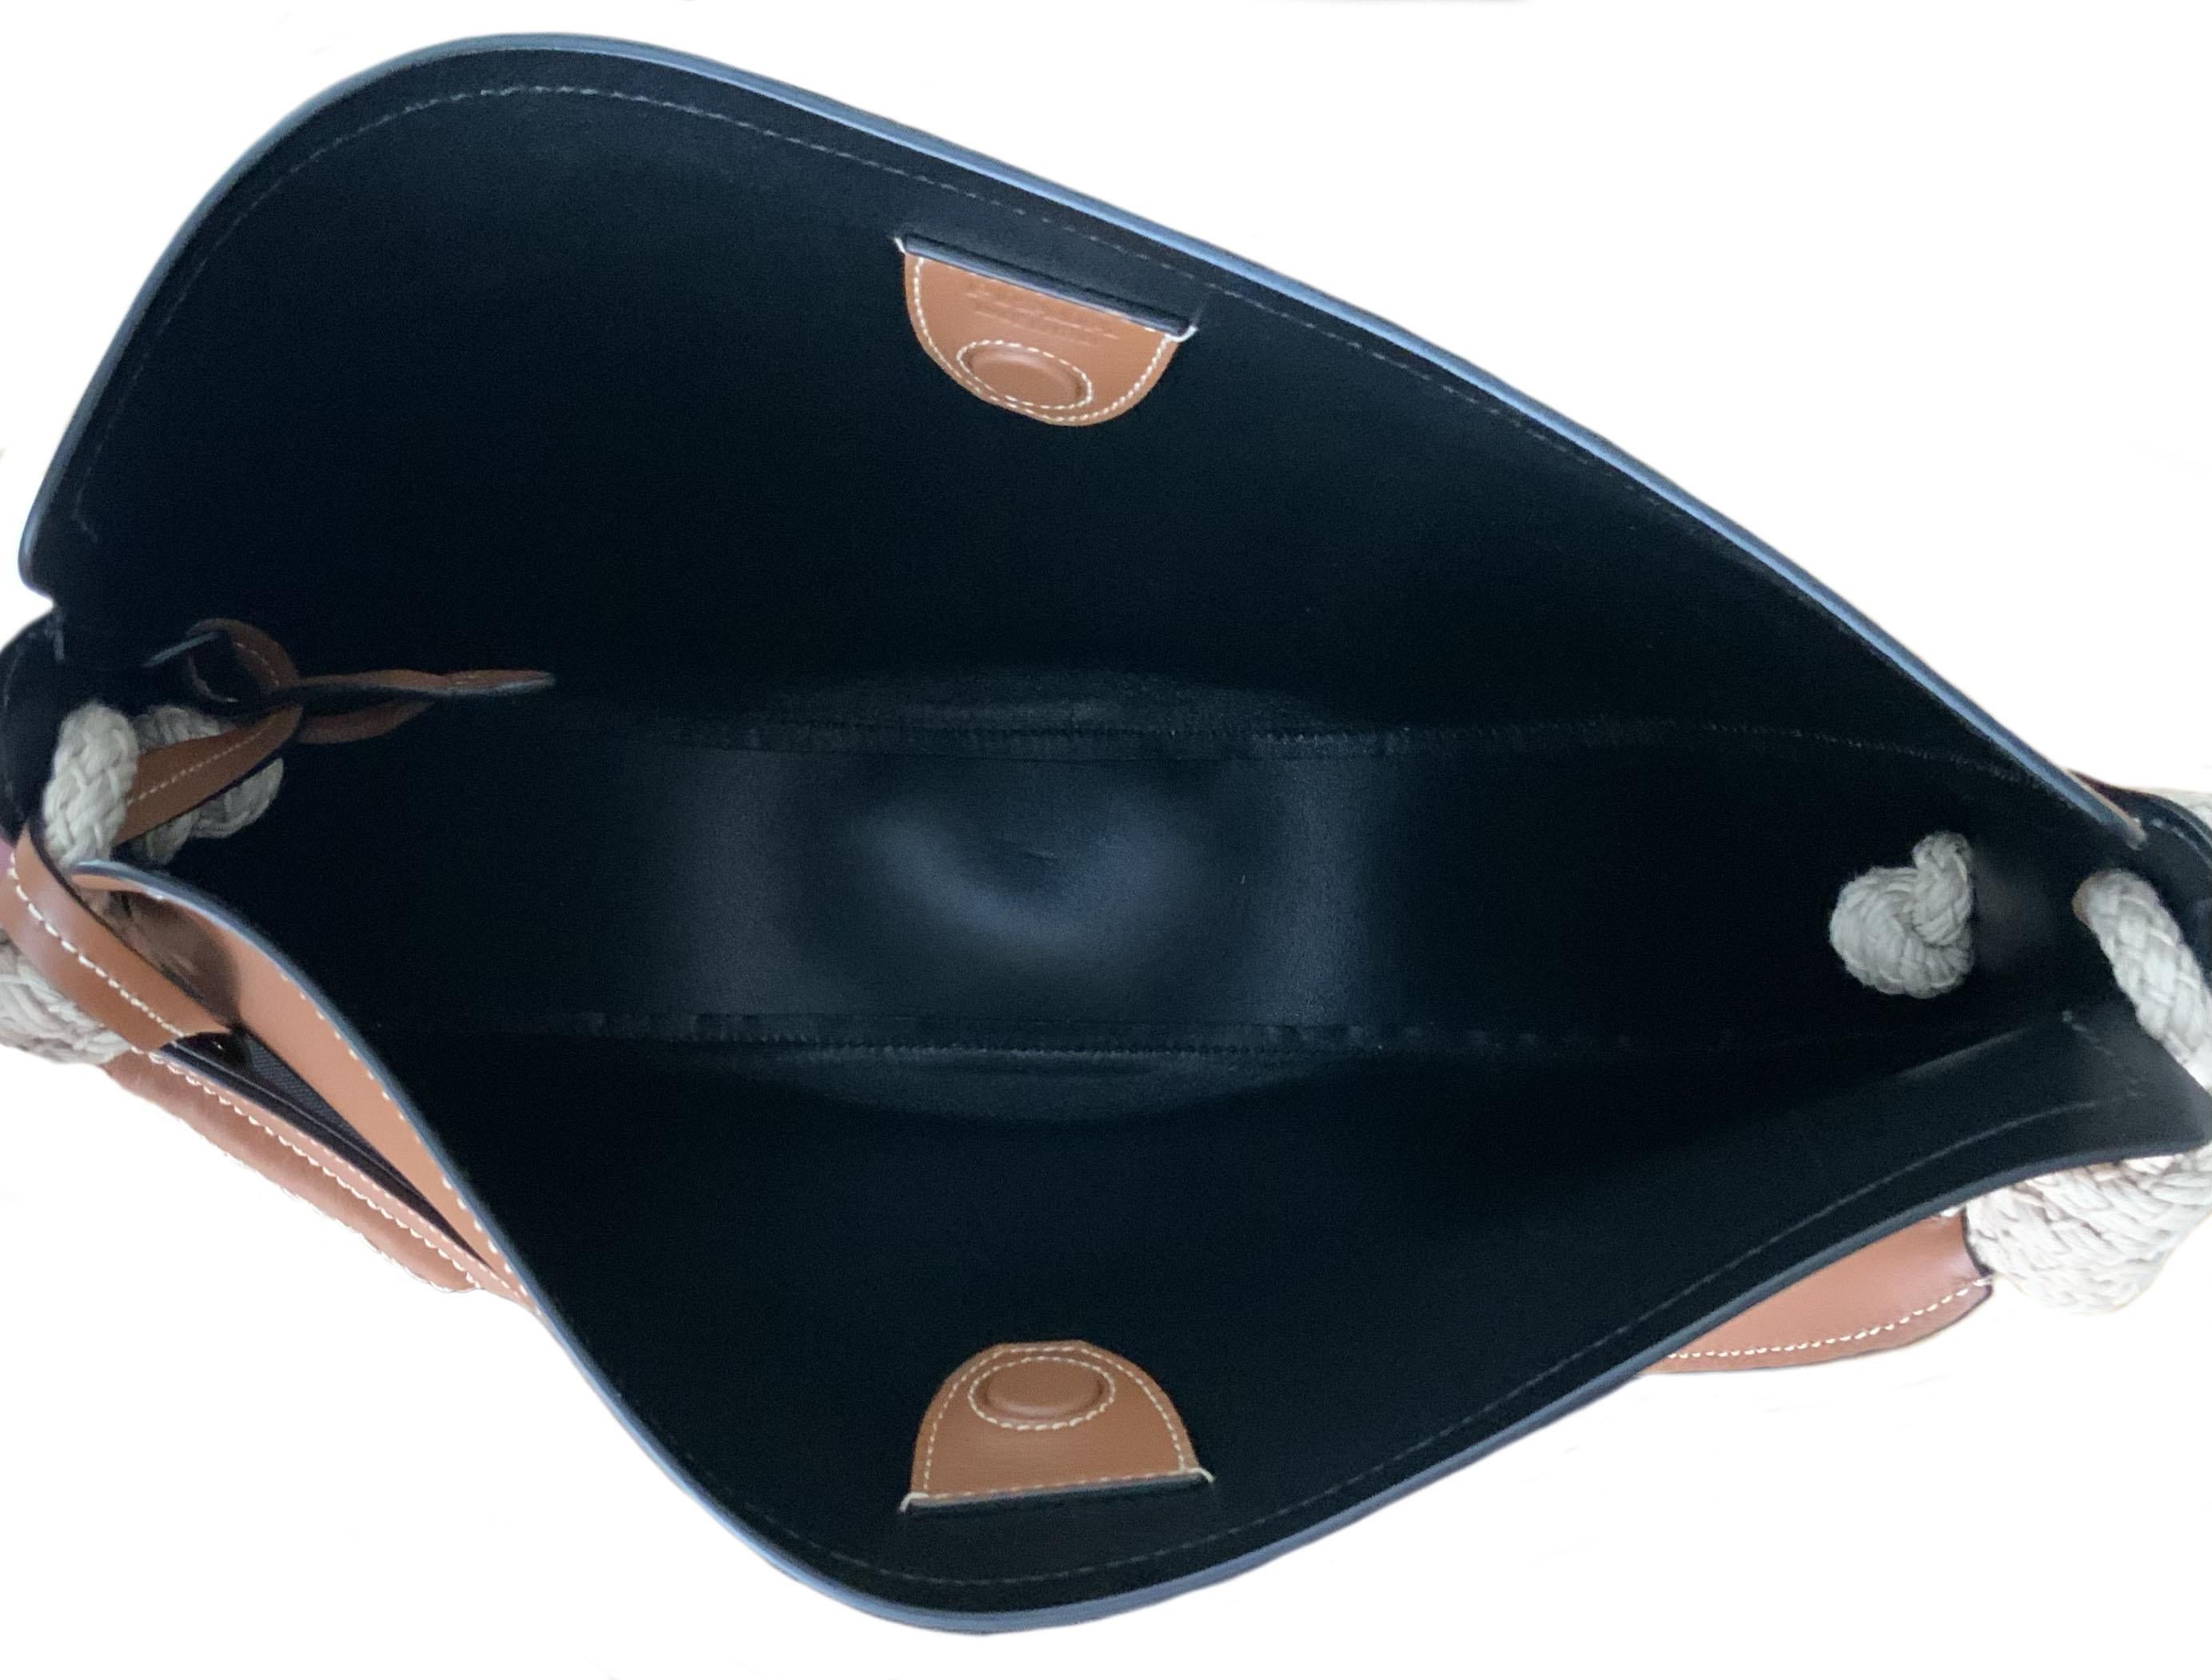 Prada Cognac Leather Bag with Cord Details 2